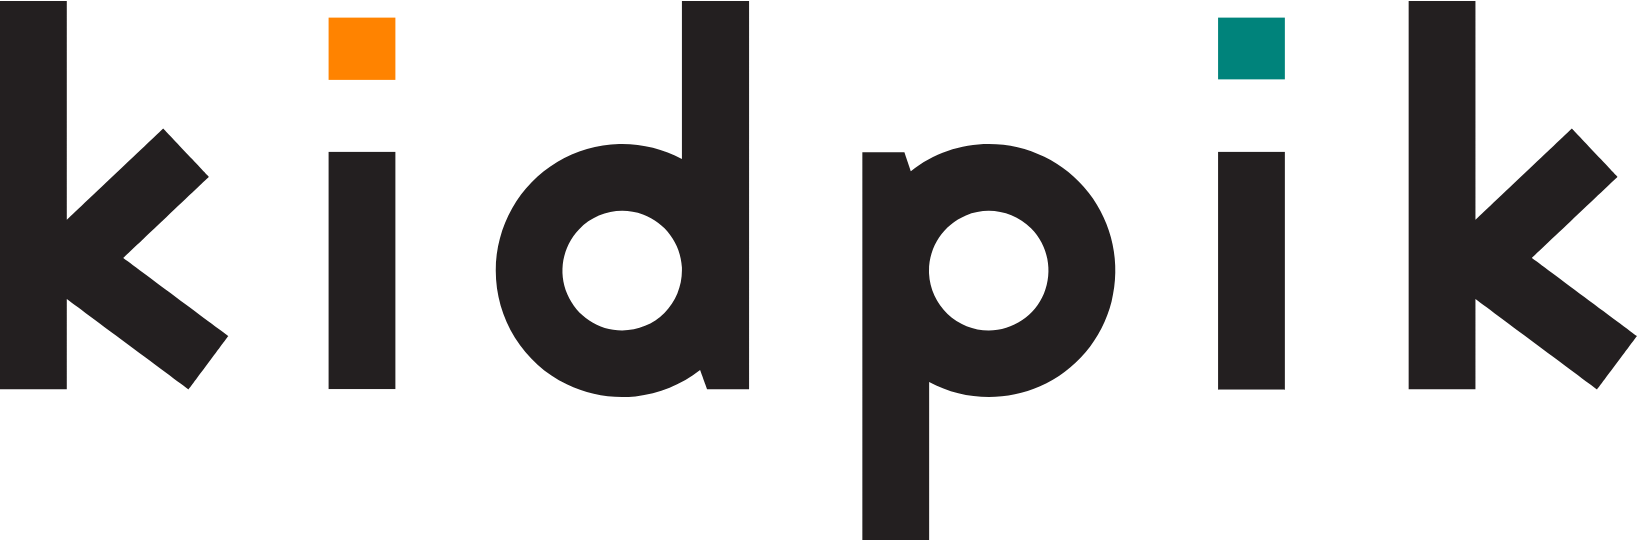 Kidpik logo large (transparent PNG)